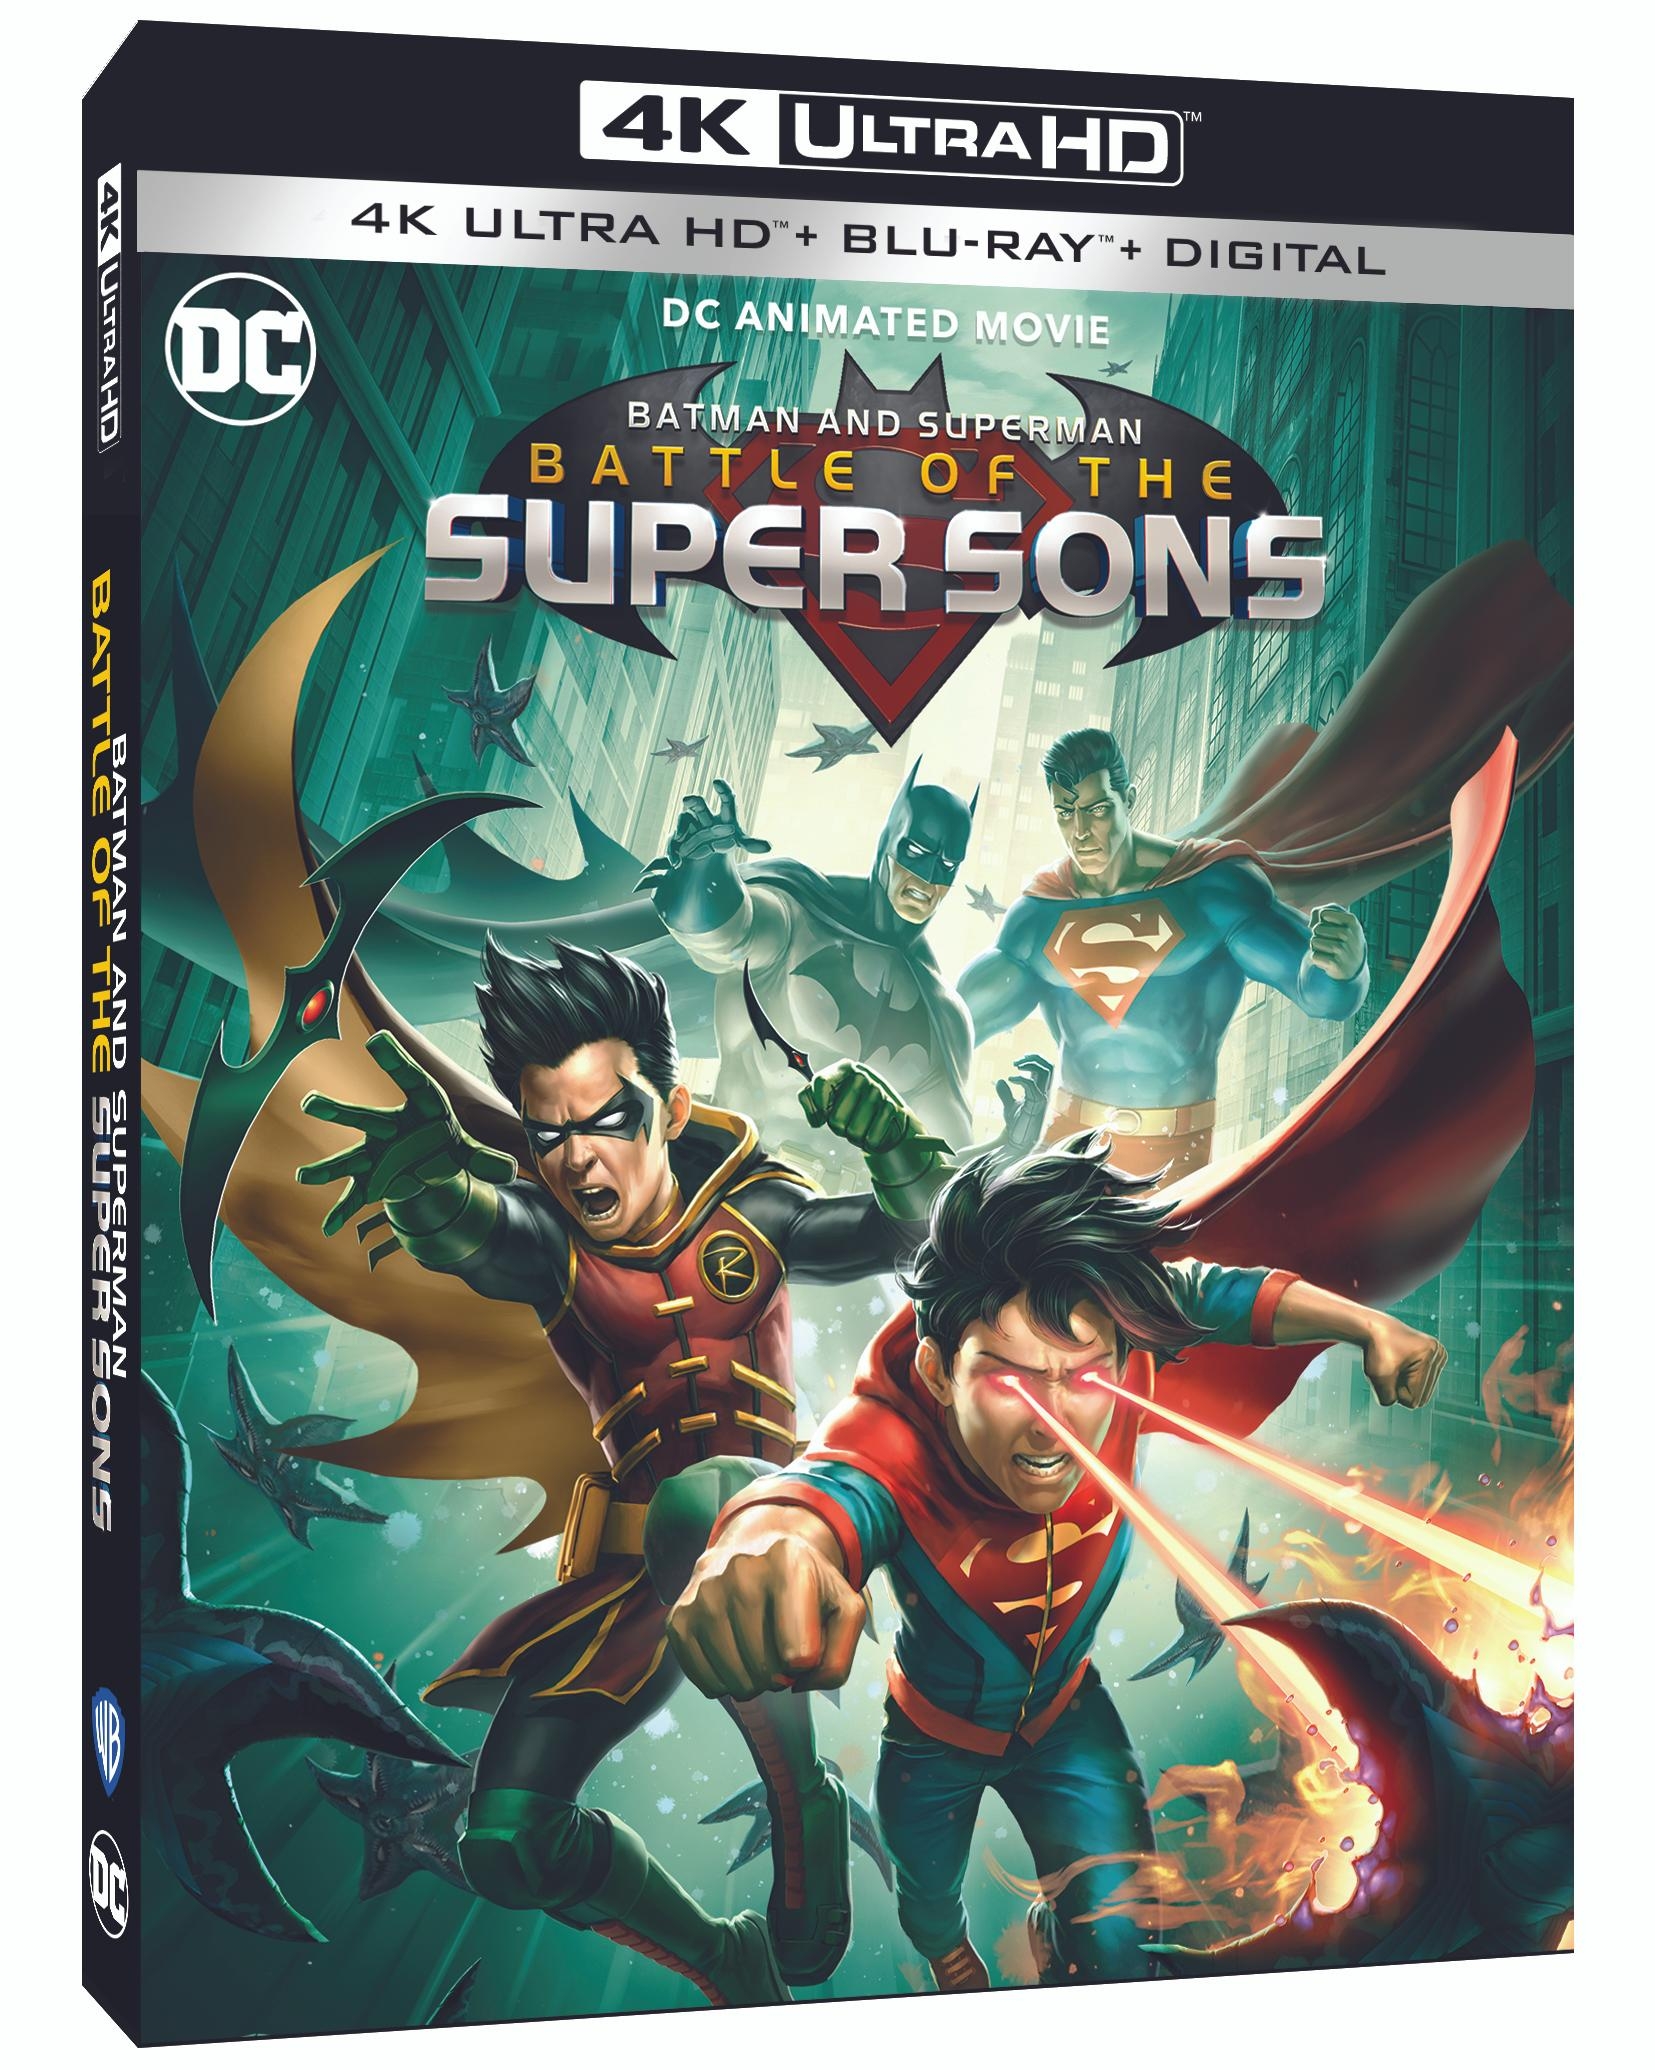 BATMAN AND SUPERMAN: BATTLE OF THE SUPER SONS Arrives on 4K Ultra HD,  Blu-ray & Digital October 18 